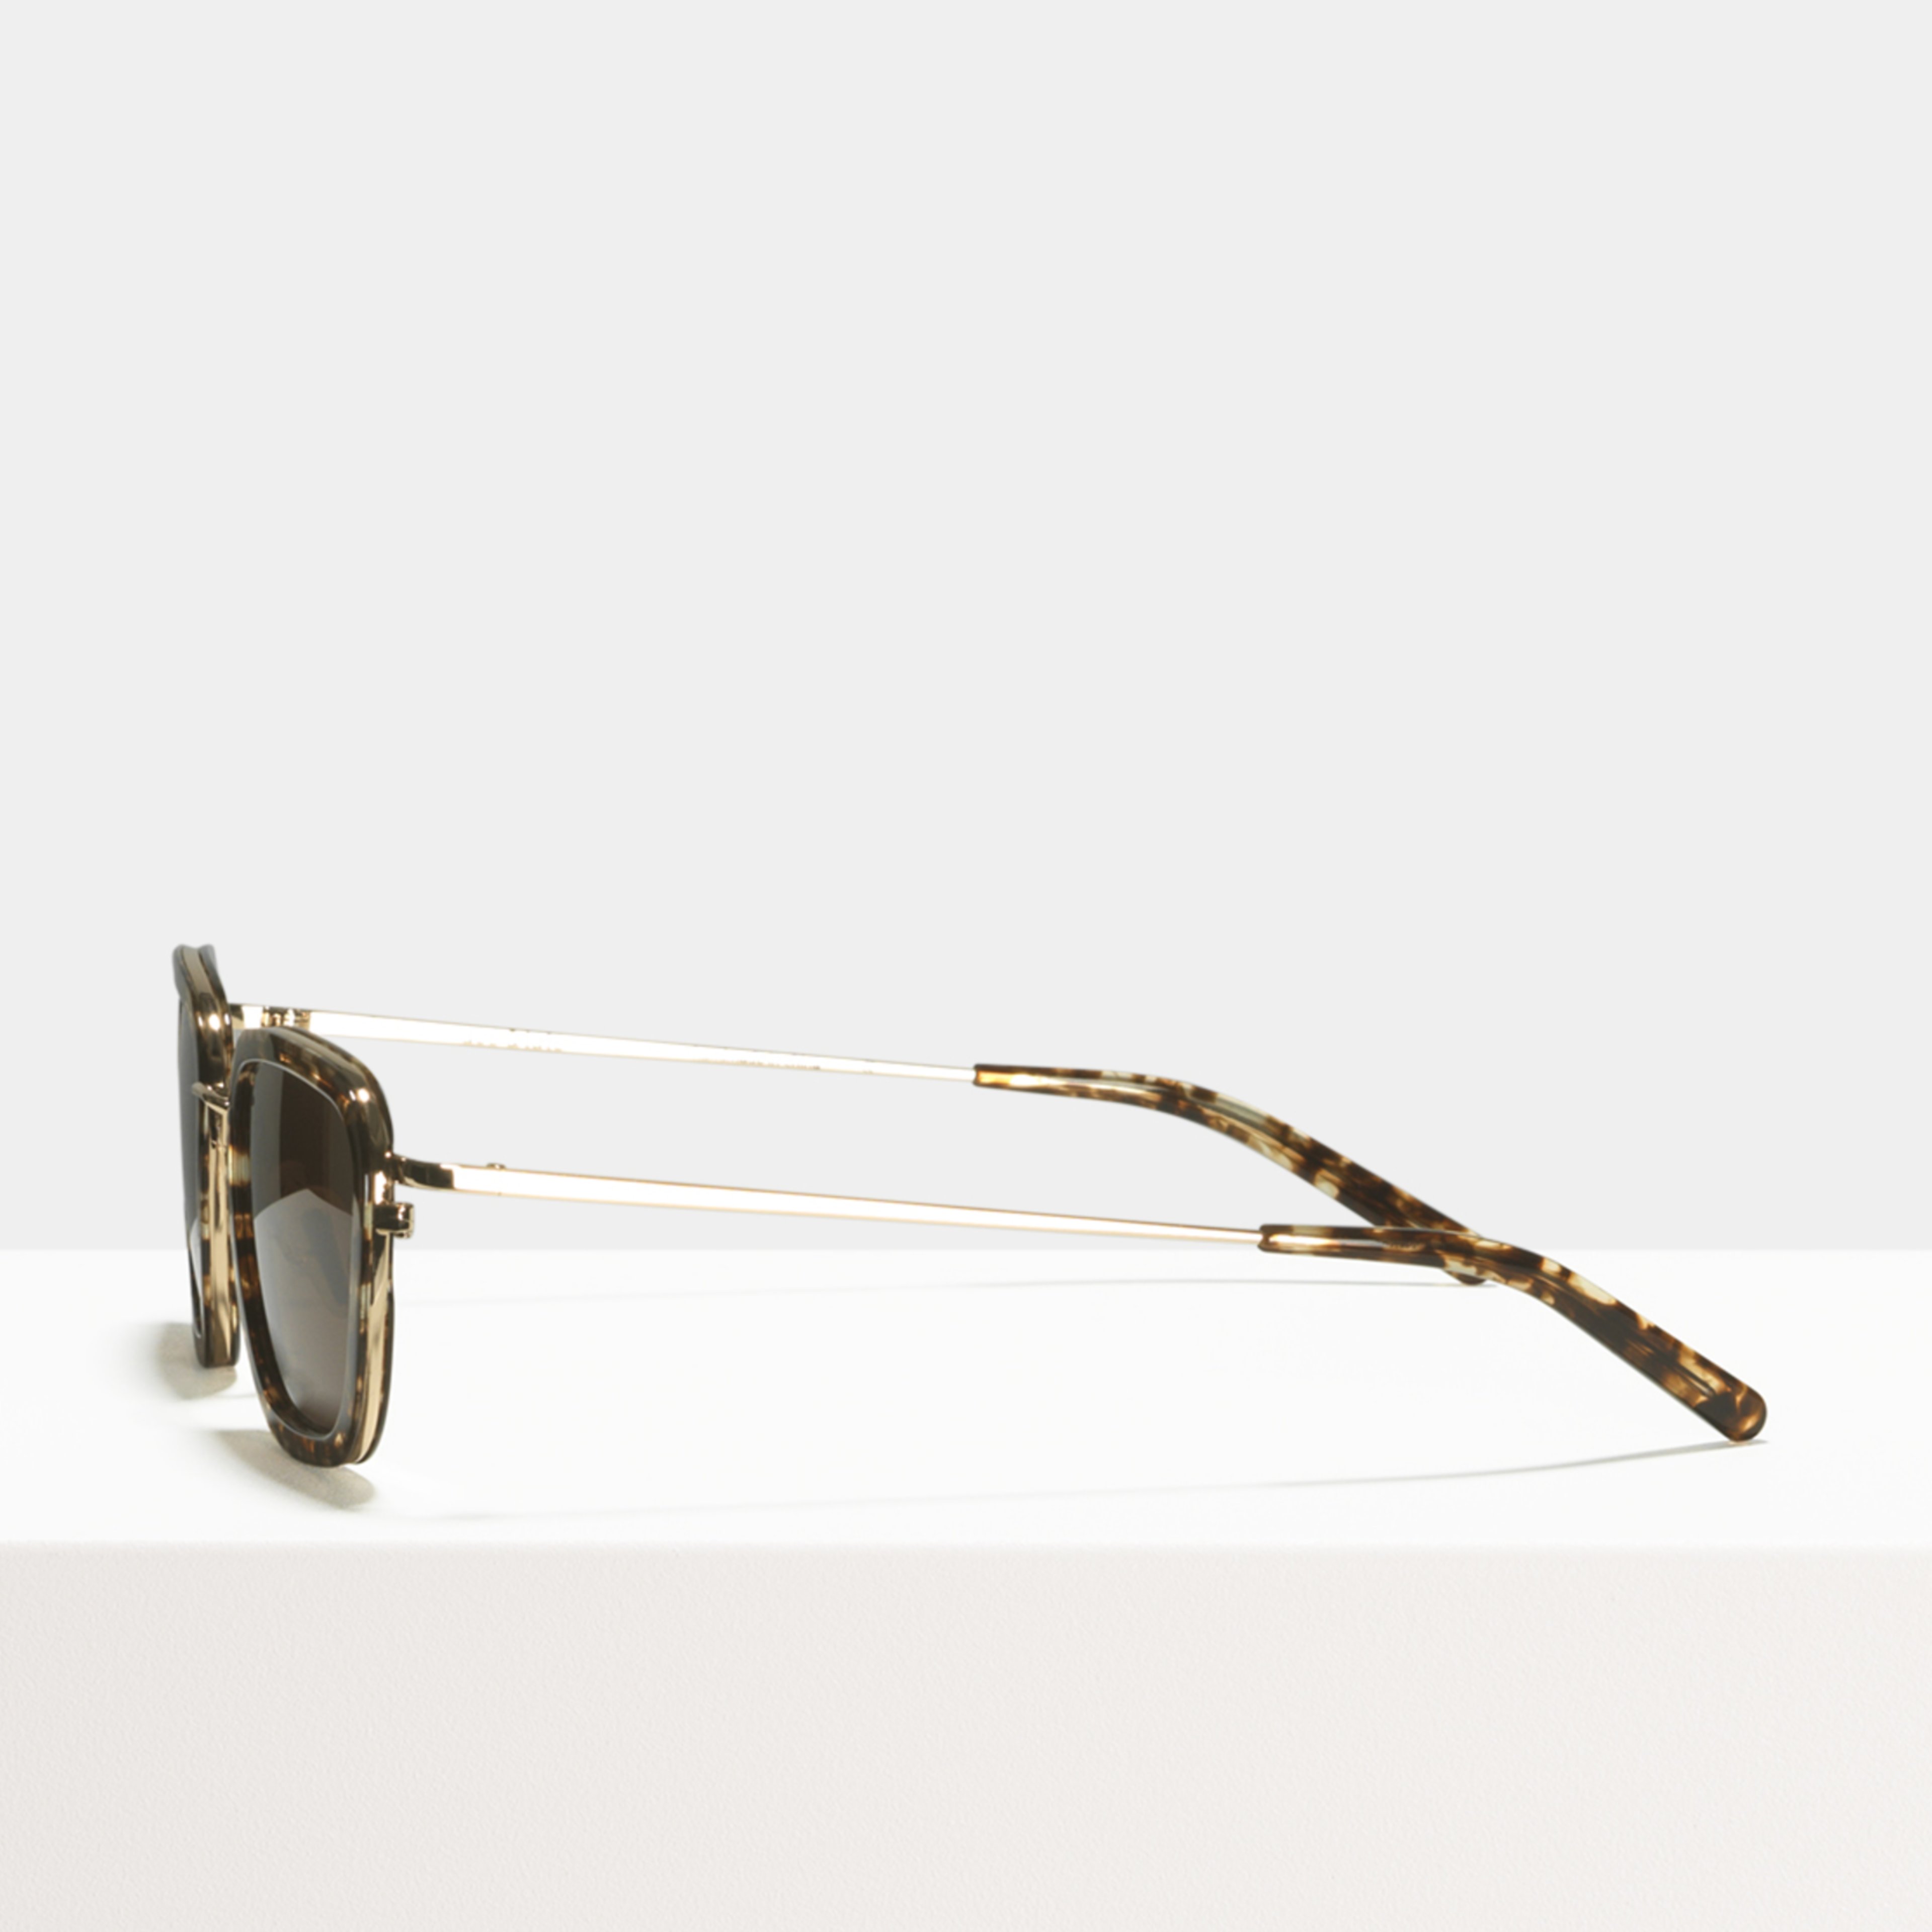 Ace & Tate Sunglasses | square combi in Brown